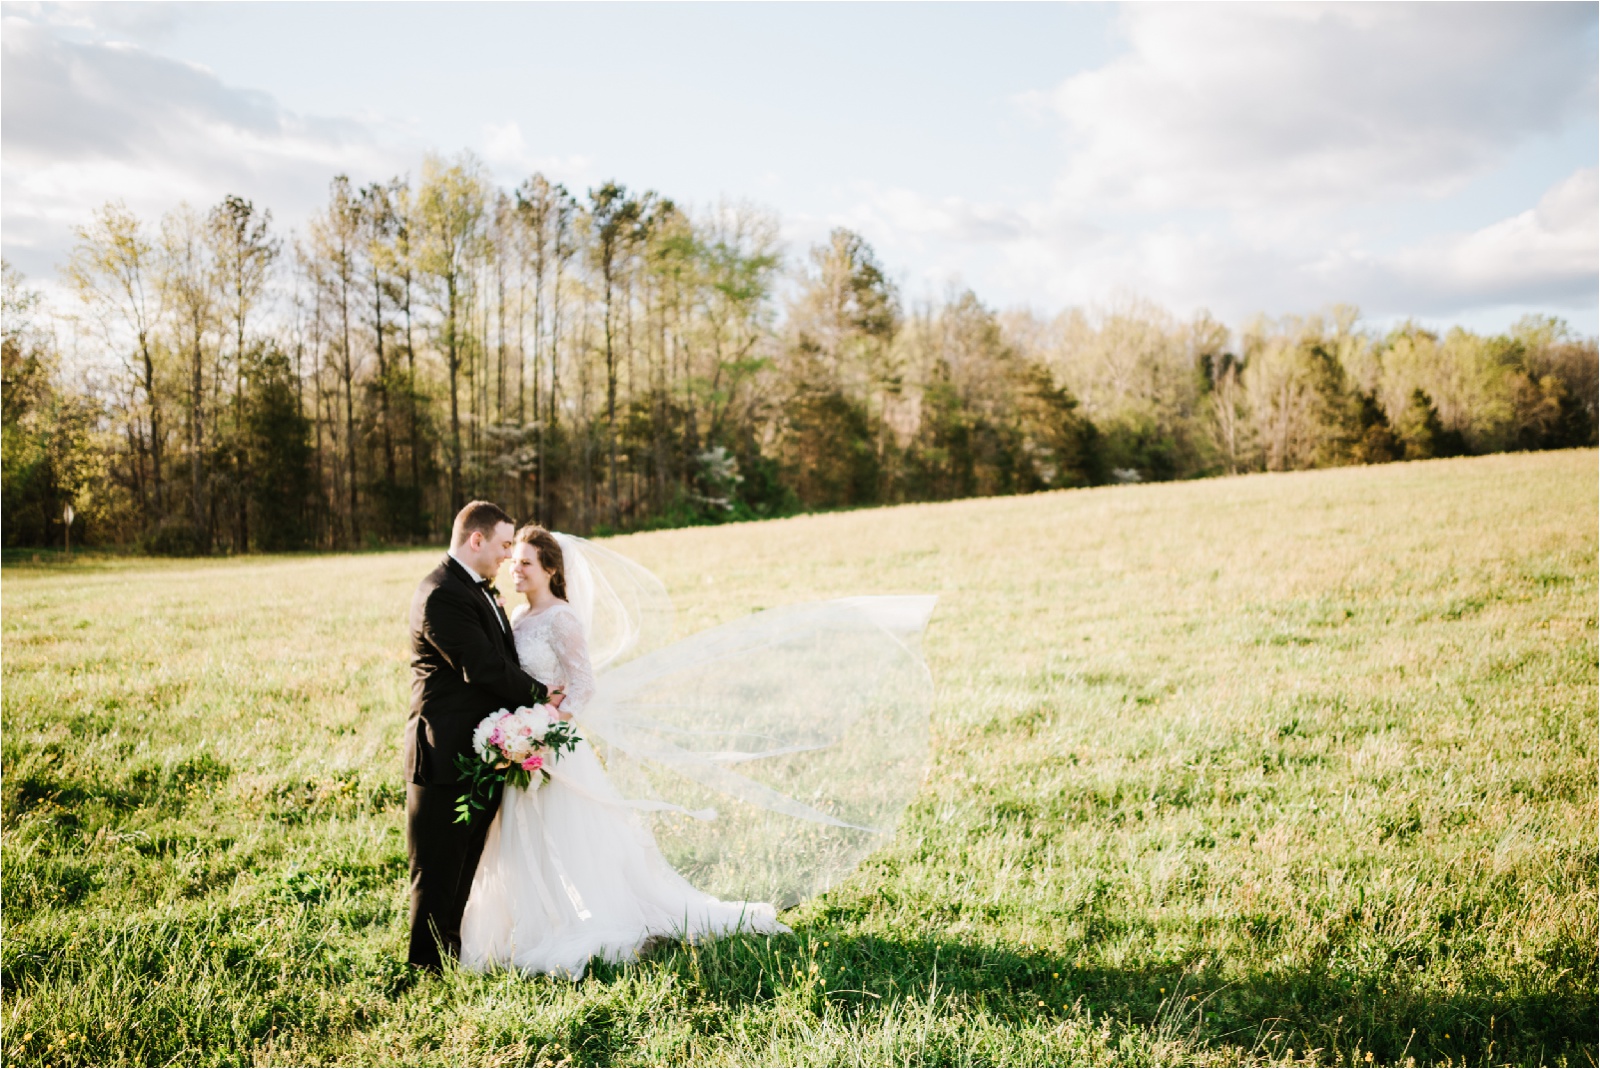 Garden Inspired Pastel Spring Wedding at Fox Hall in Richmond, VA by Boston & New England Wedding Photographer Annmarie Swift